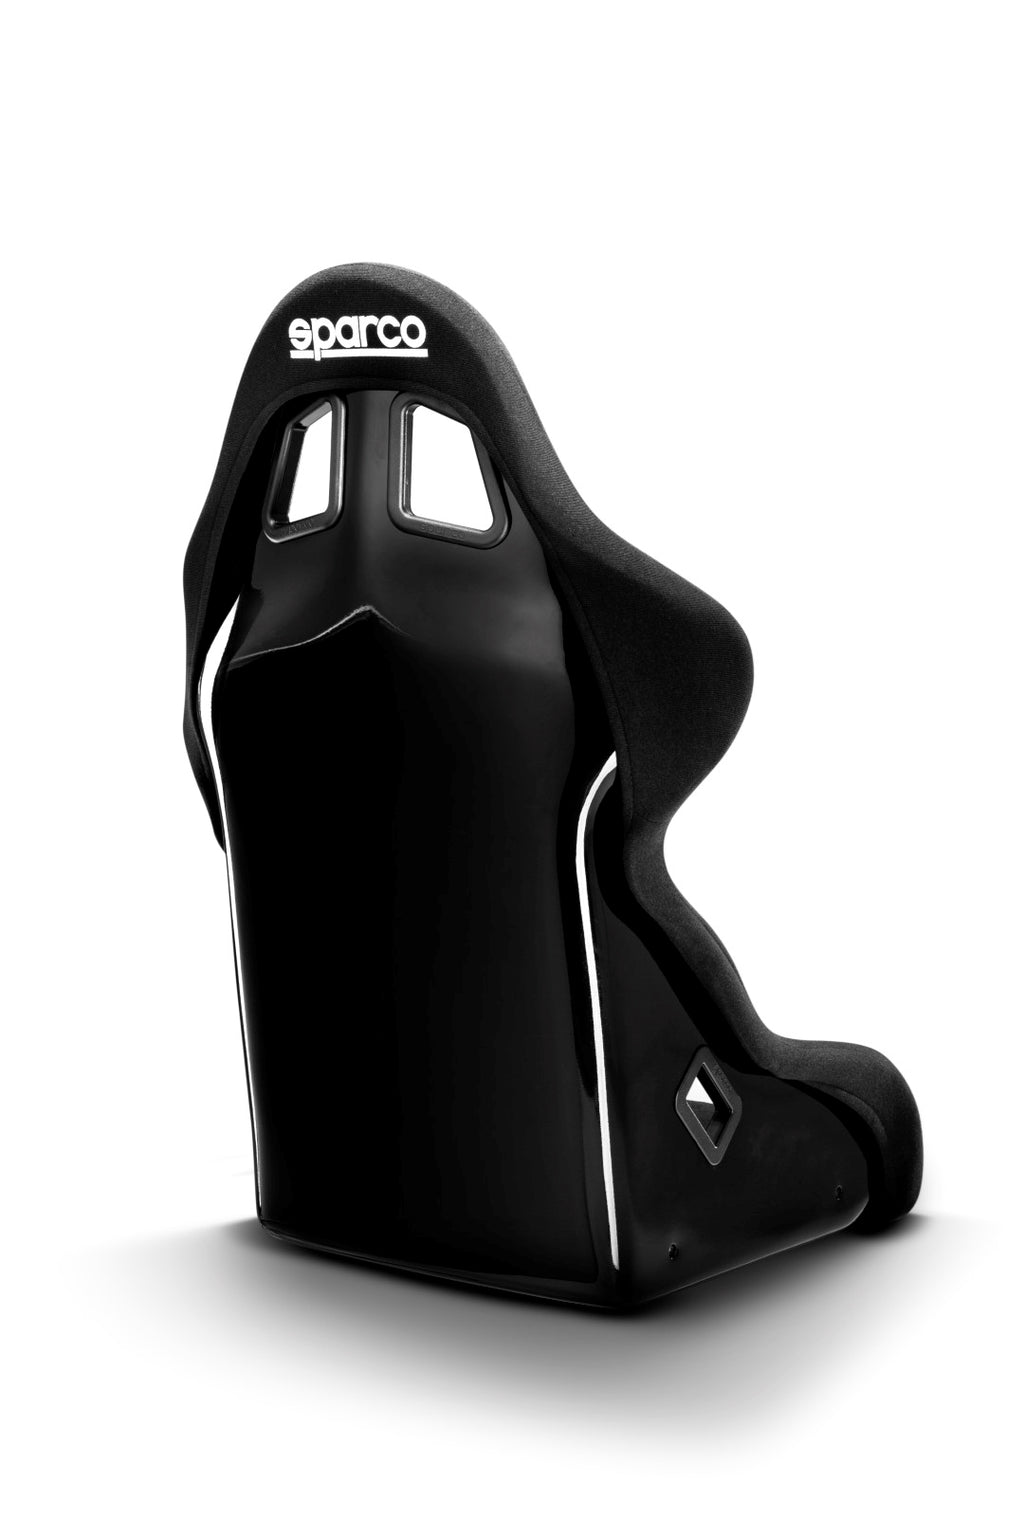 Sparco - Pro 2000 QRT Competition Seat